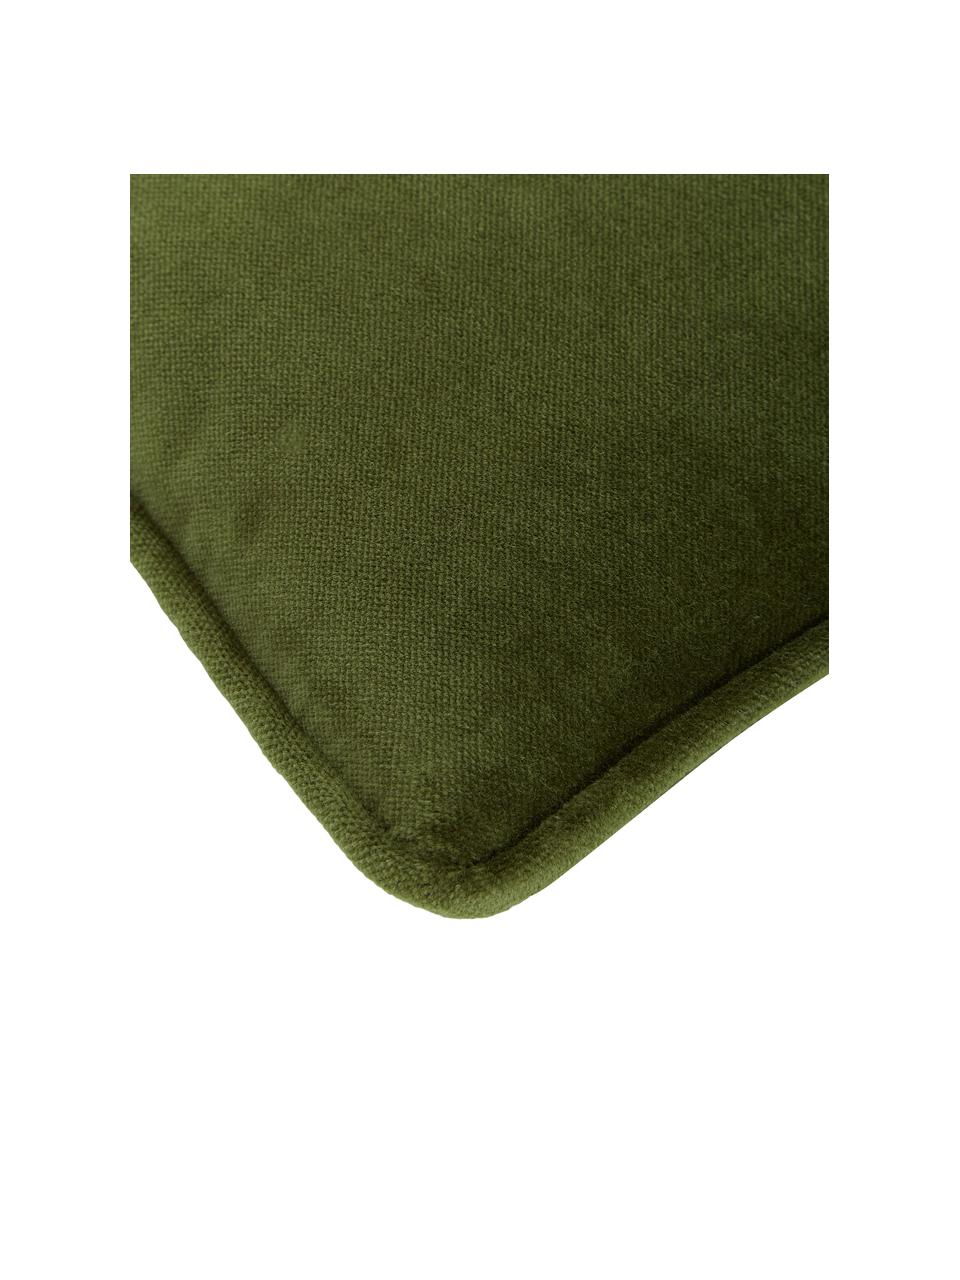 Federa arredo in velluto verde muschio Dana, 100% velluto di cotone, Verde muschio, Larg. 50 x Lung. 50 cm